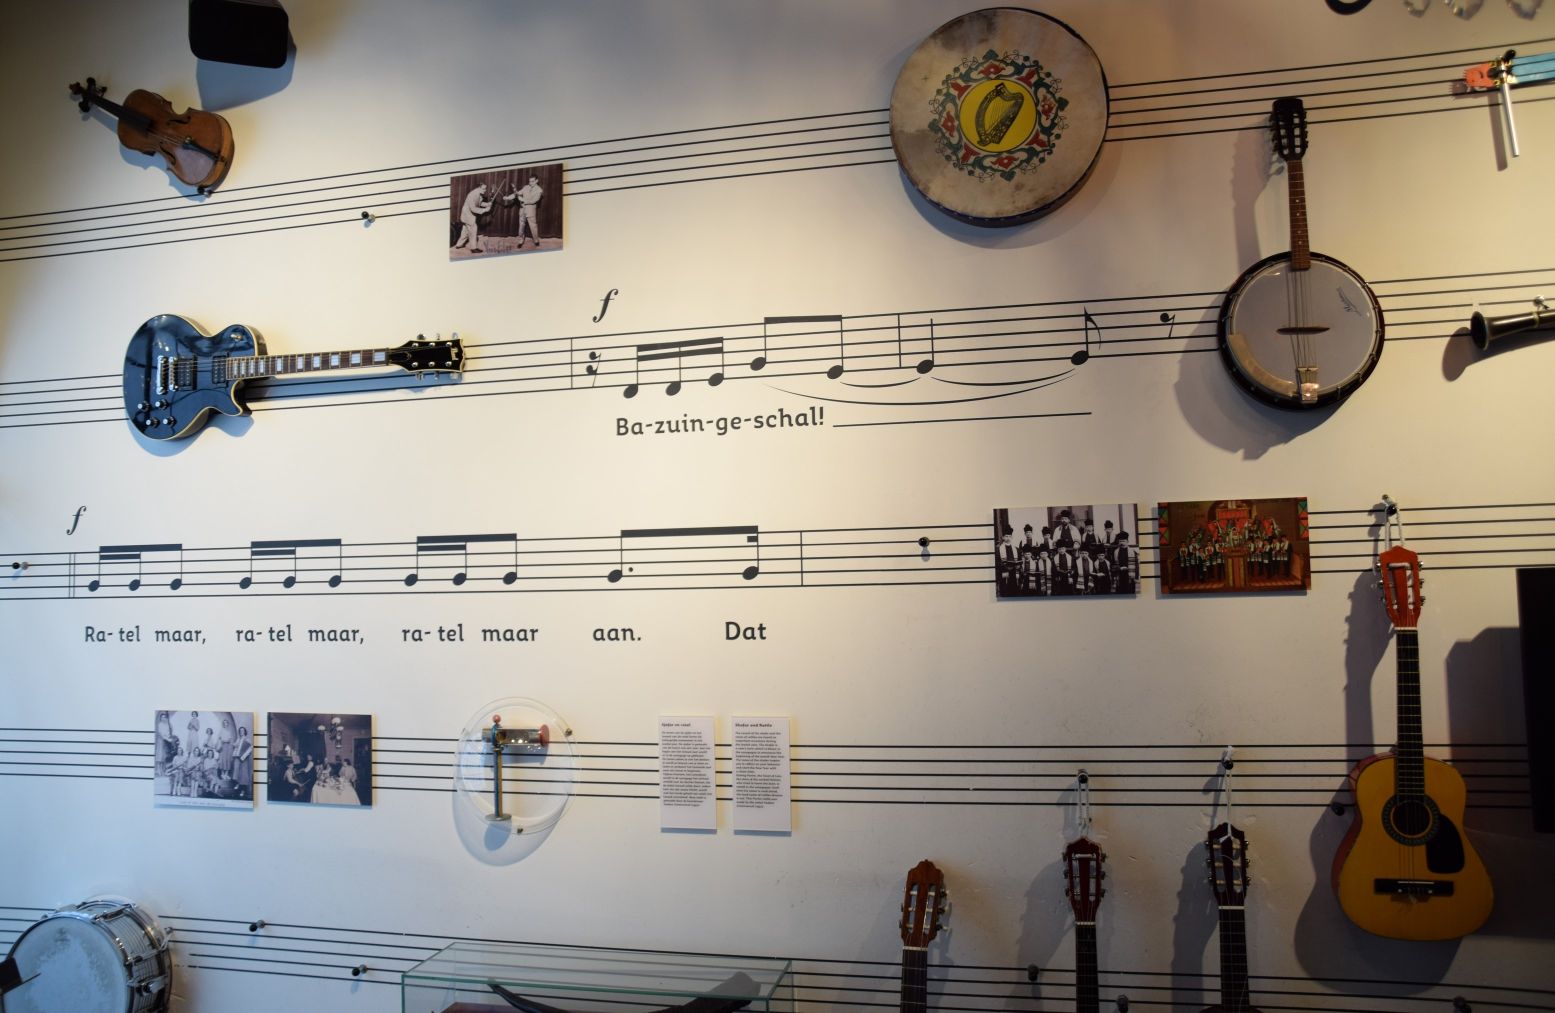 In de muziekkamer kun je zelf muziek maken. Foto: DagjeWeg.NL